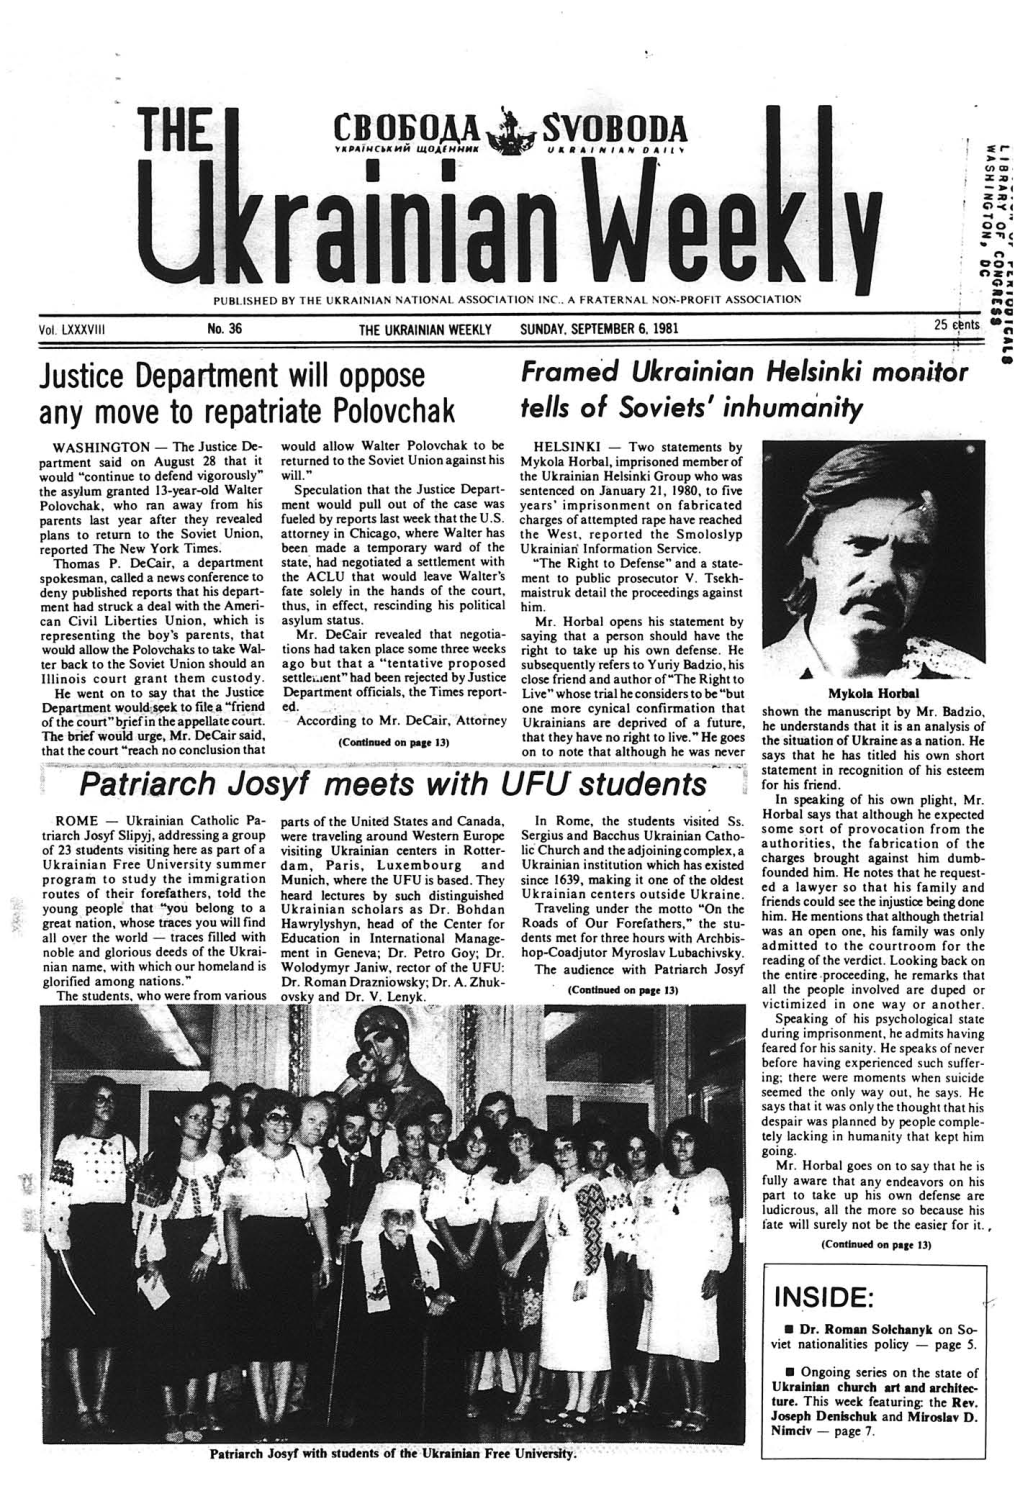 The Ukrainian Weekly 1981, No.36